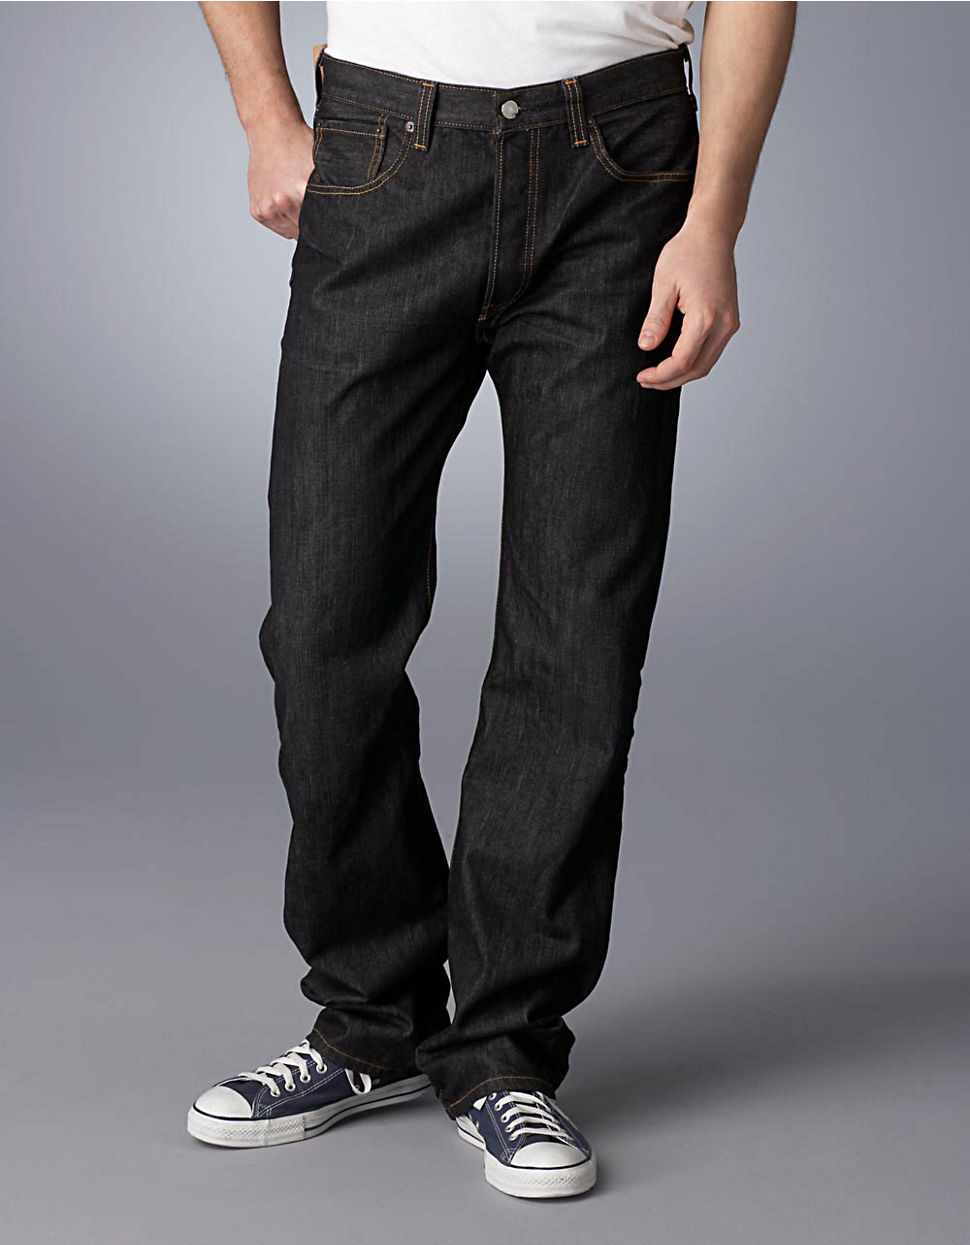 Levi's Iconic Black 501; Original Jeans - Smart Value in Black for Men